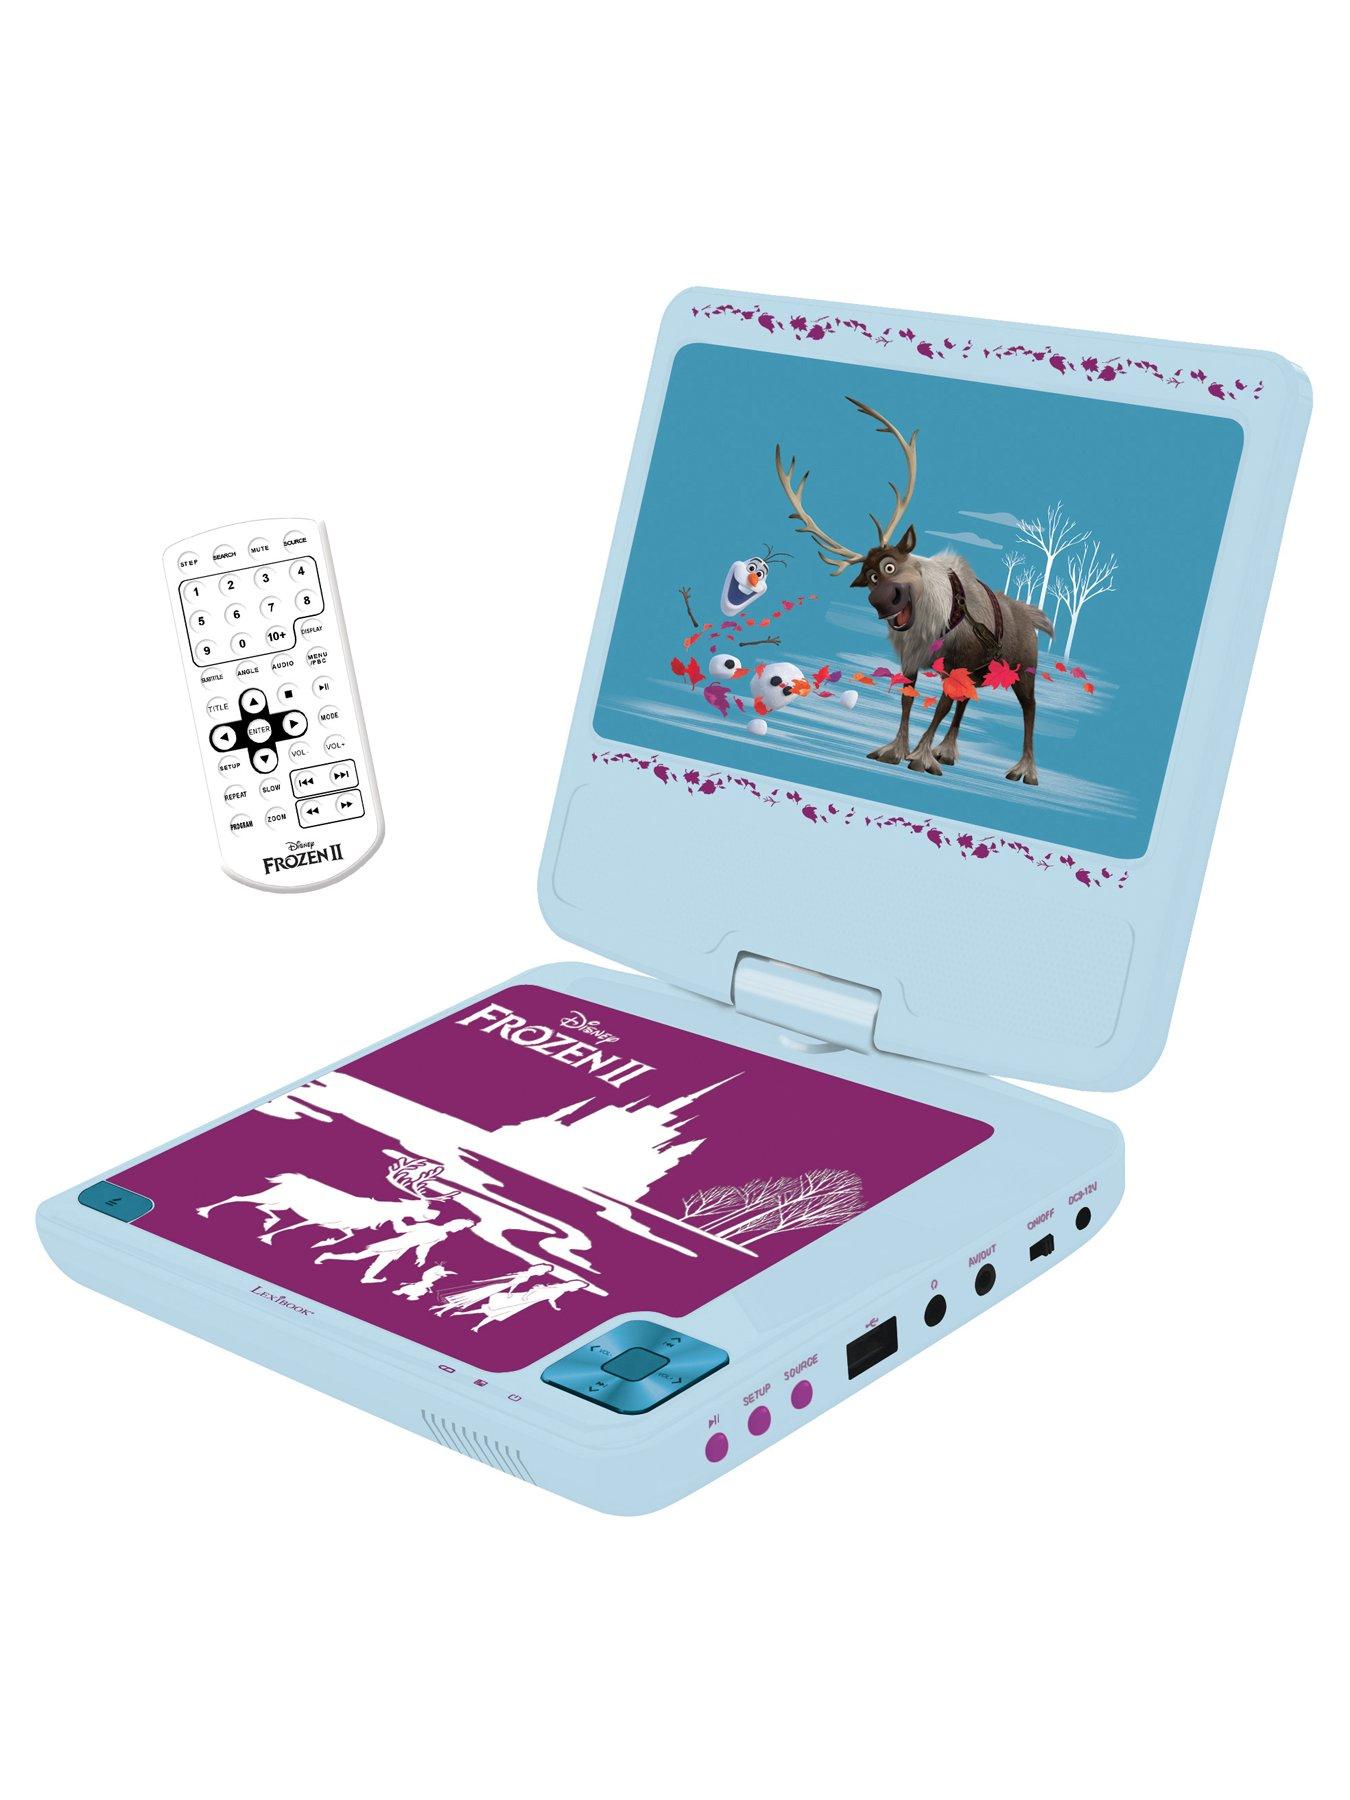 Disney Frozen Frozen Portable Dvd Player 7